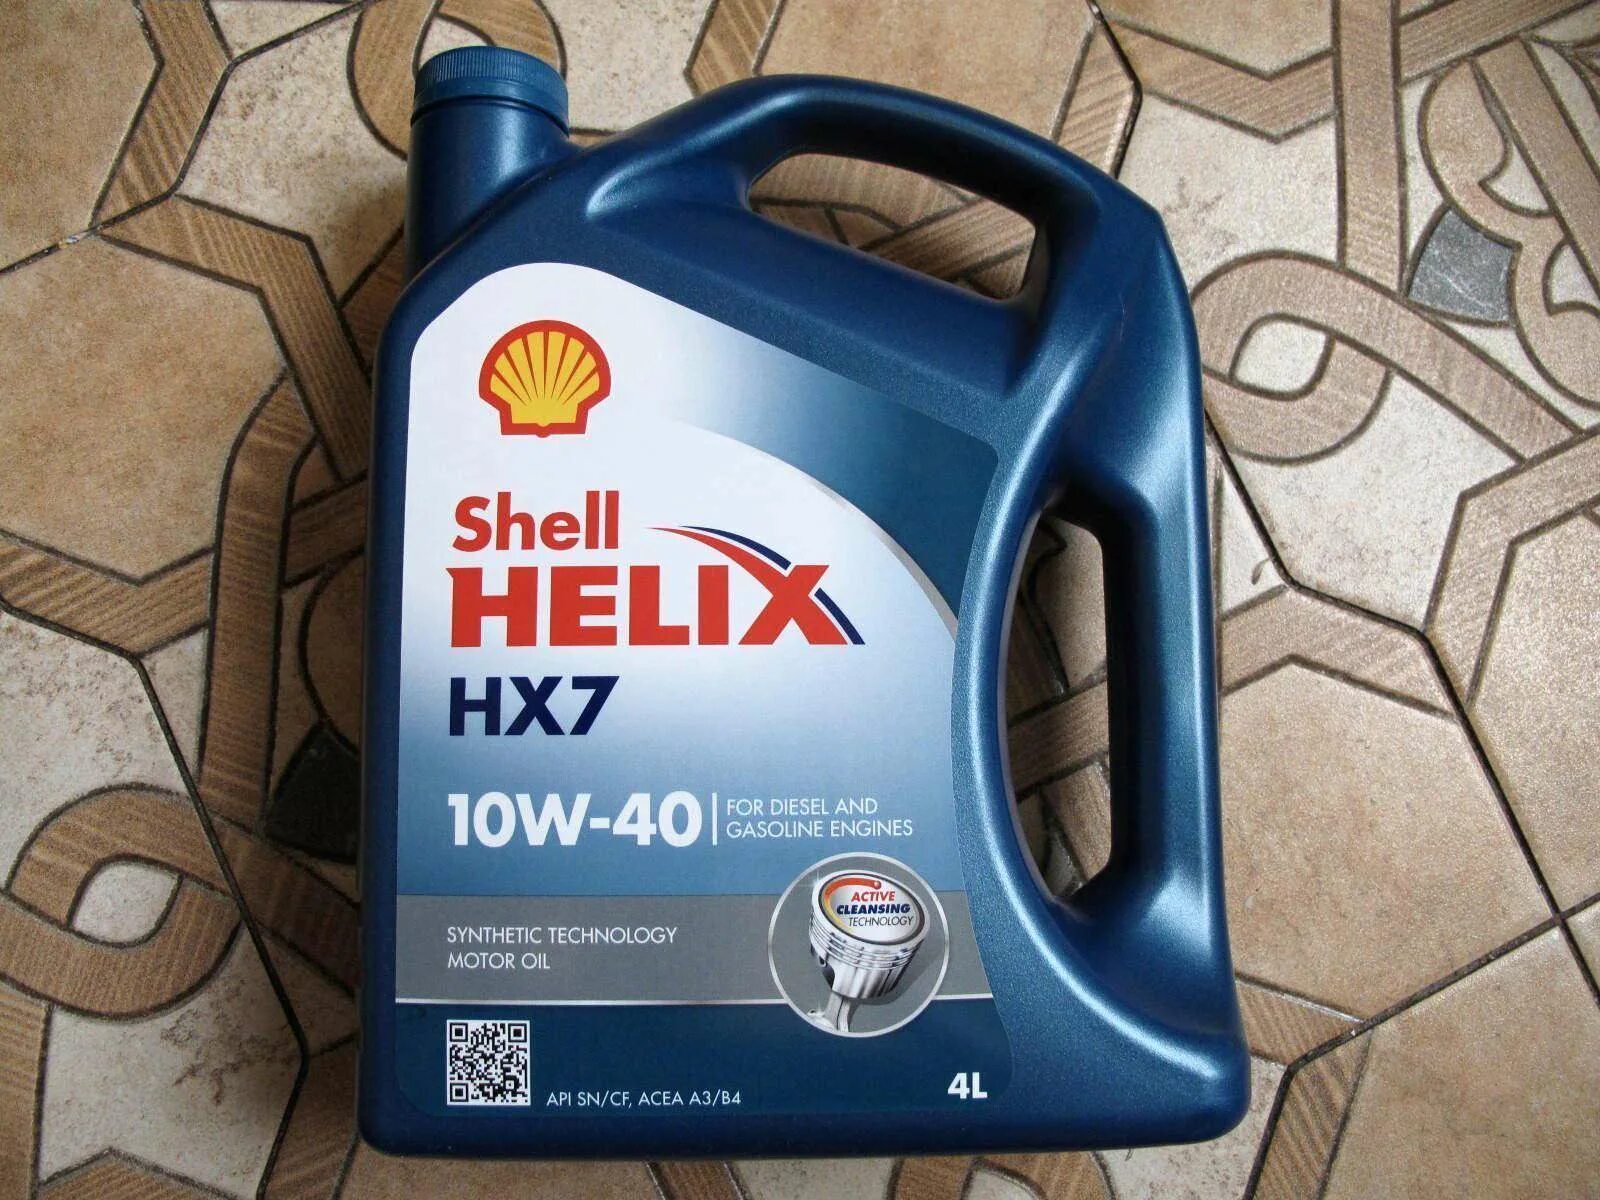 Shell HX 7 10w 40 Active Cleansing. Shell hx7 10w 40 5л. Shell 10w 40 полусинтетика. Моторное масло шелл хеликс 10w 40